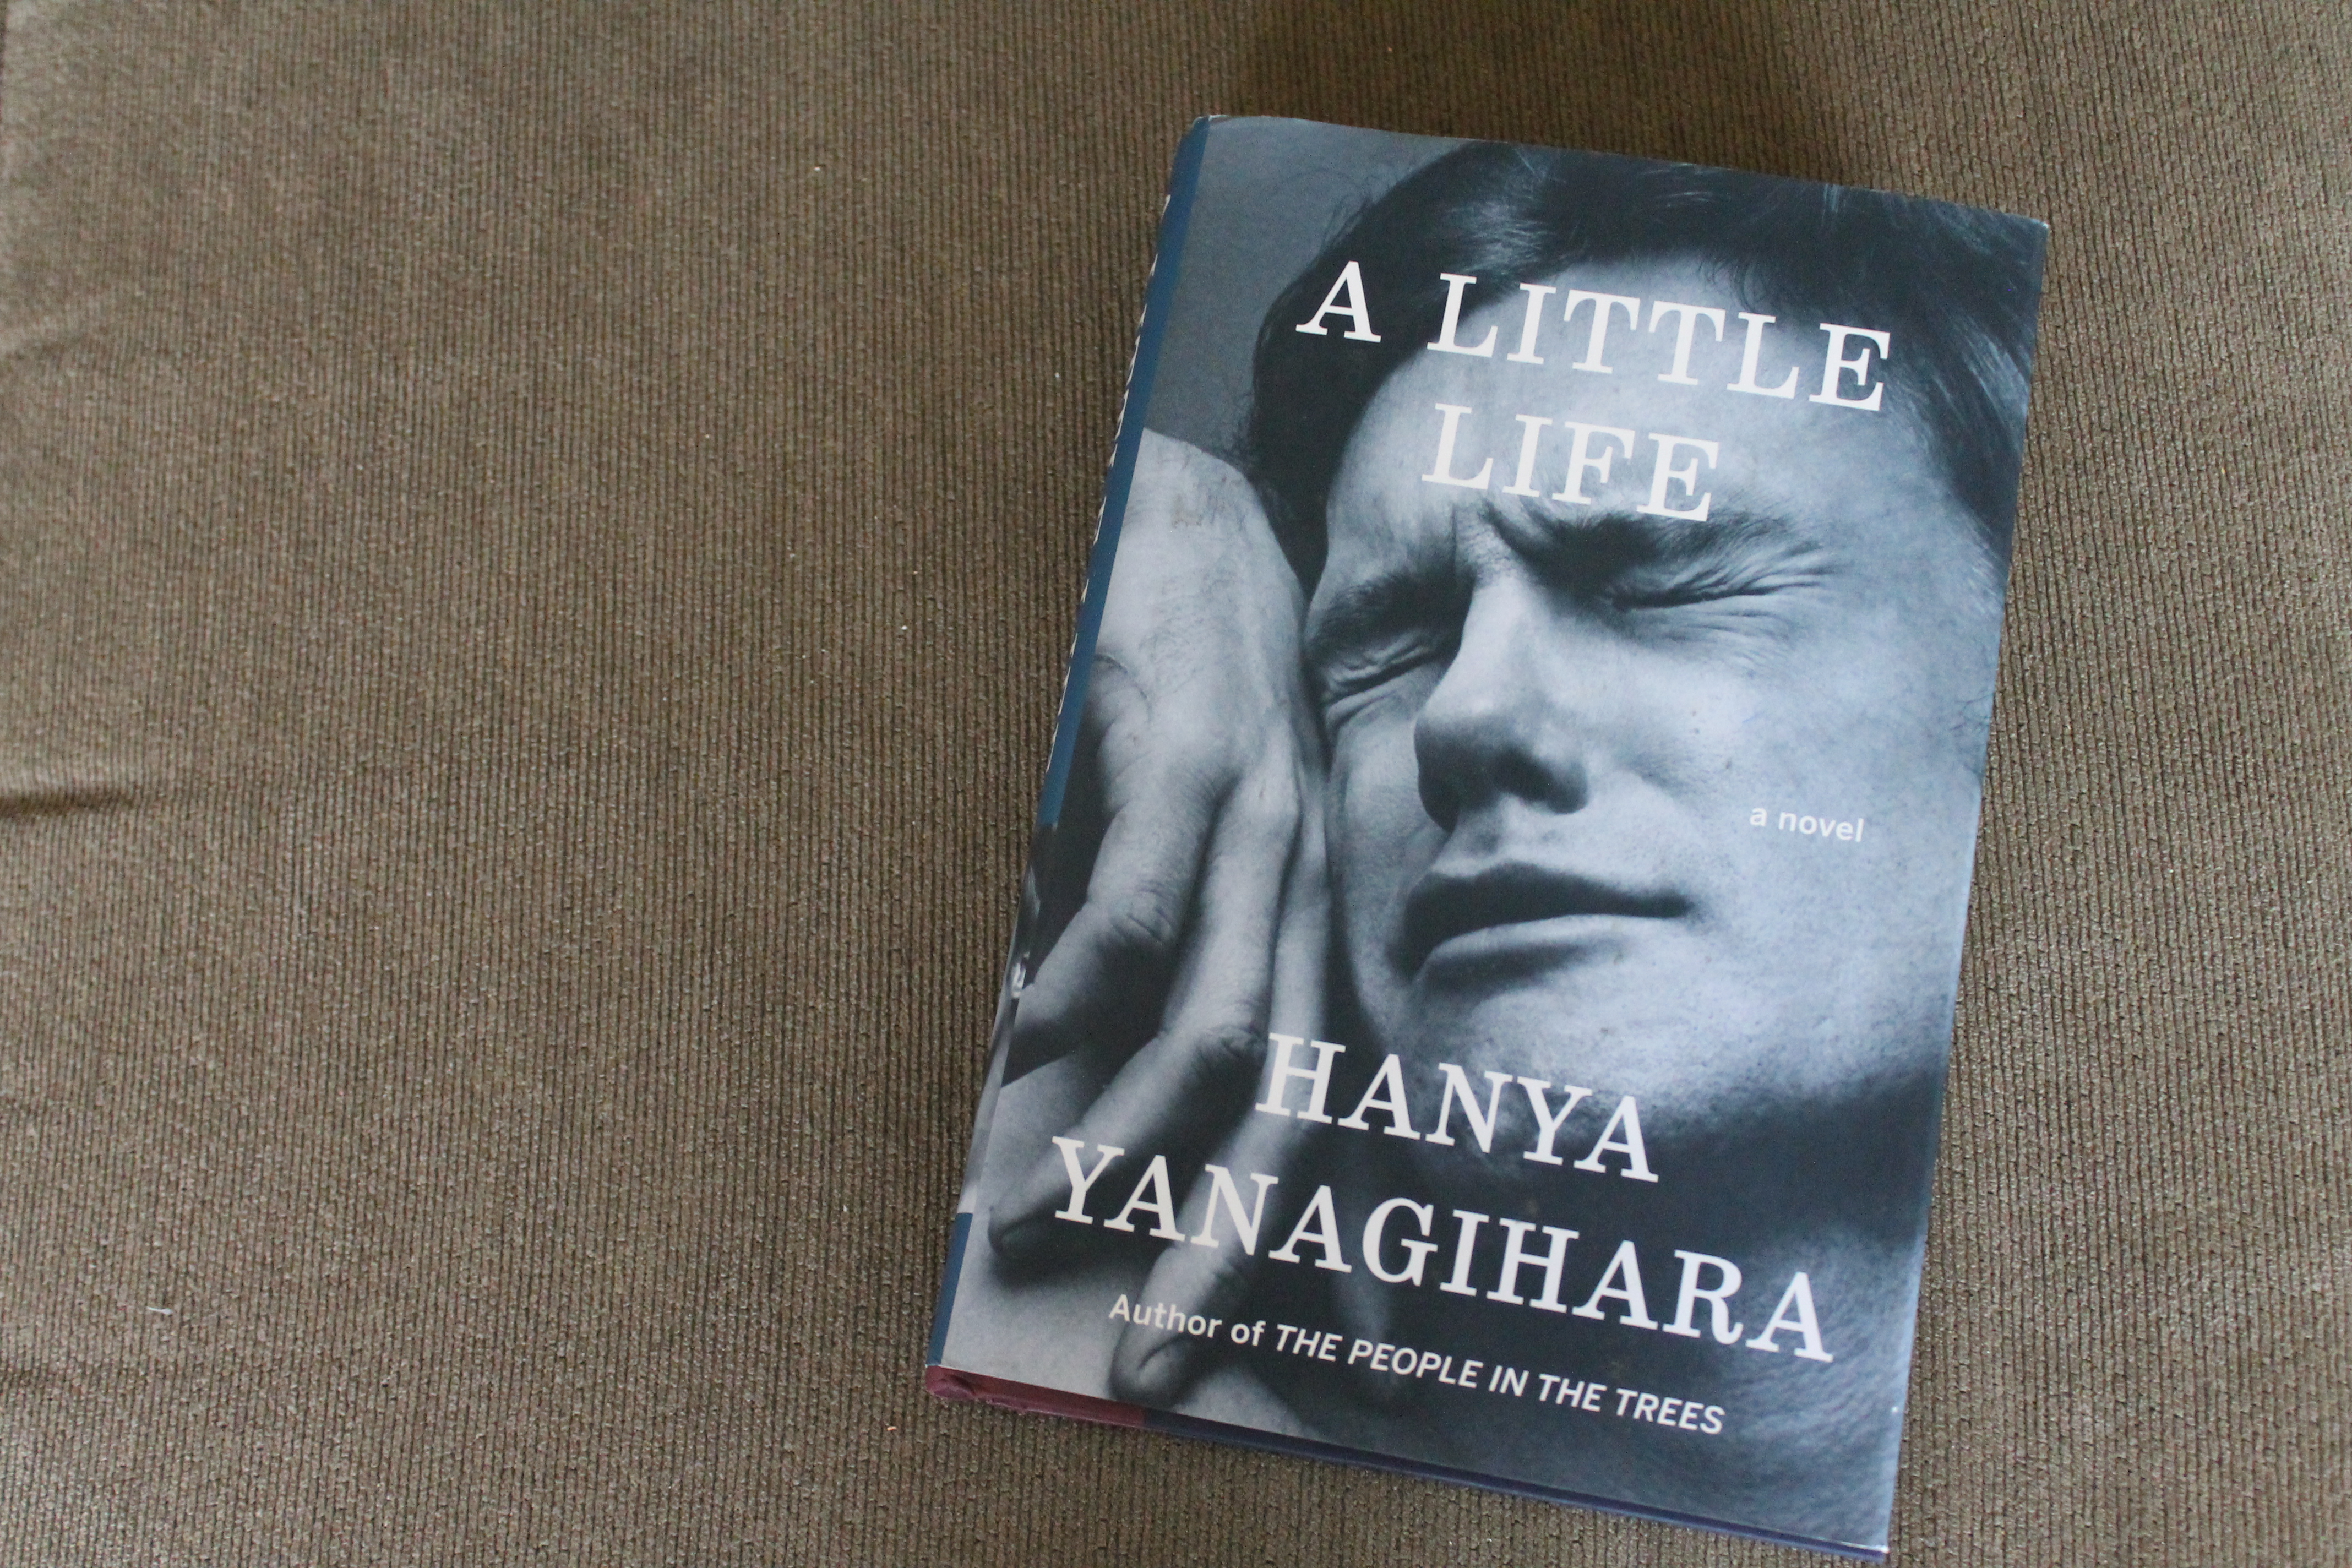 A little life книга. A little Life hanya Yanagihara.